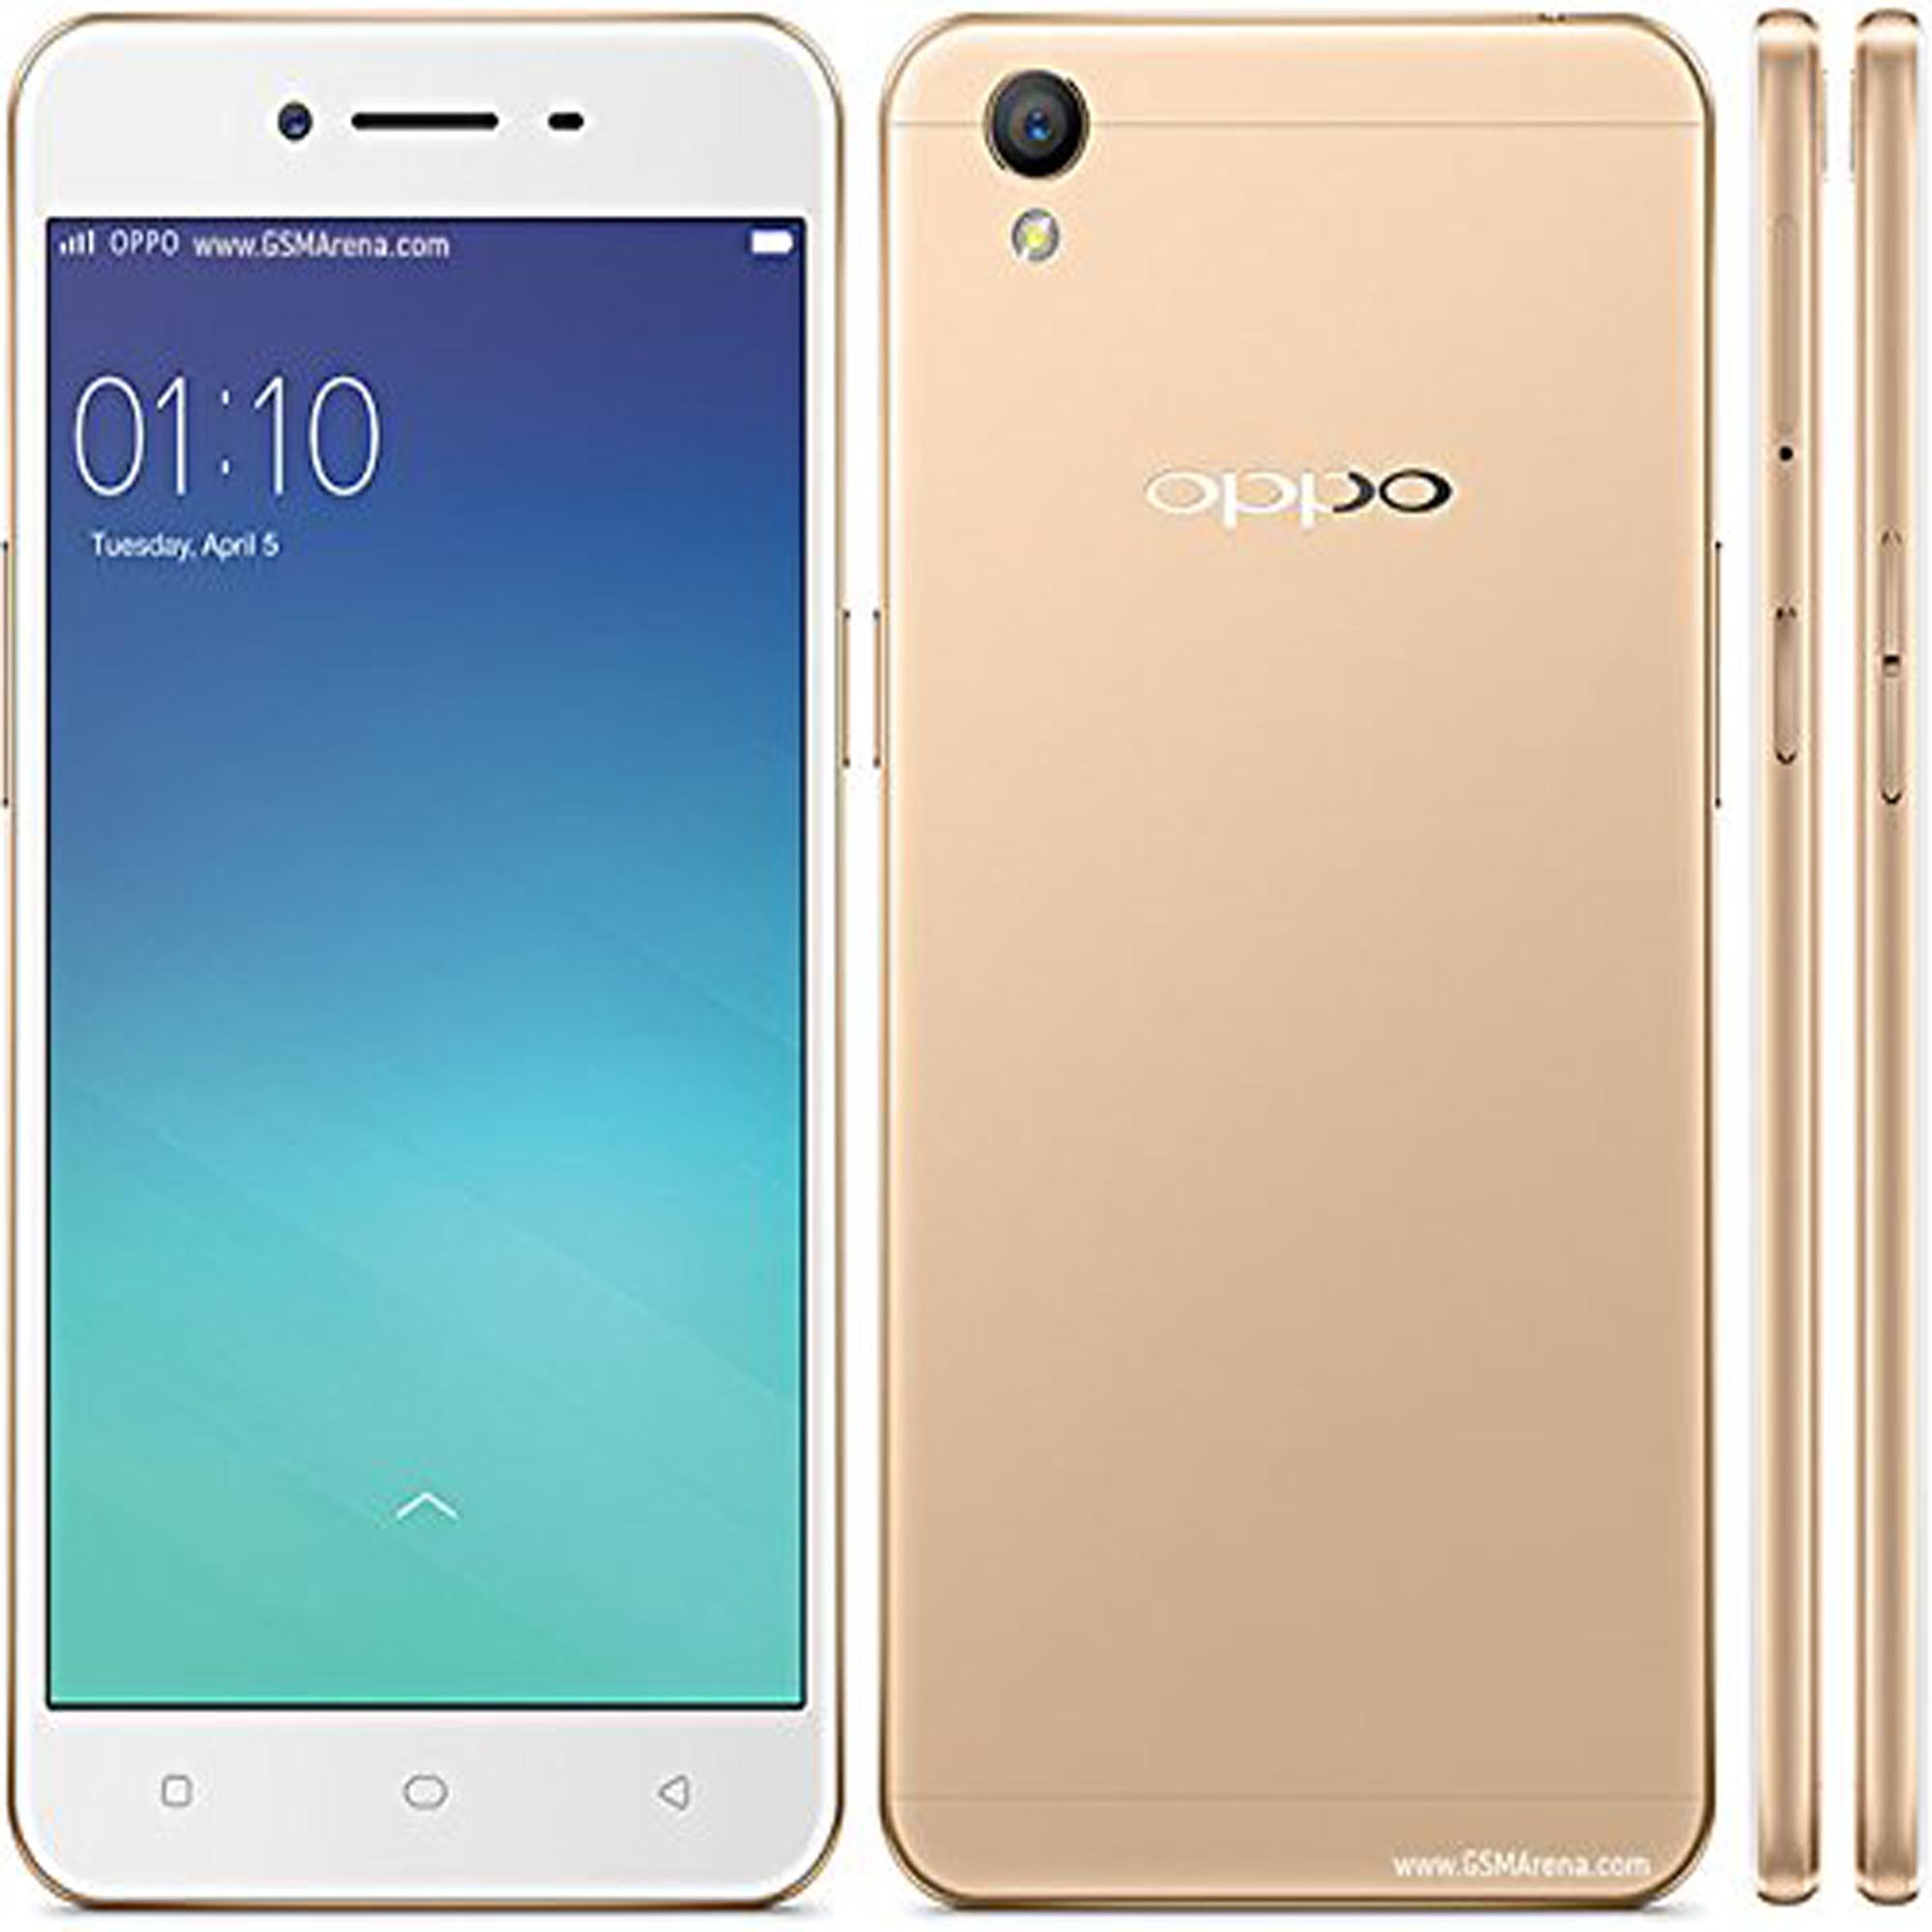 Oppo Neo 9/A37 Ram 2GB/16GB - Smartphone